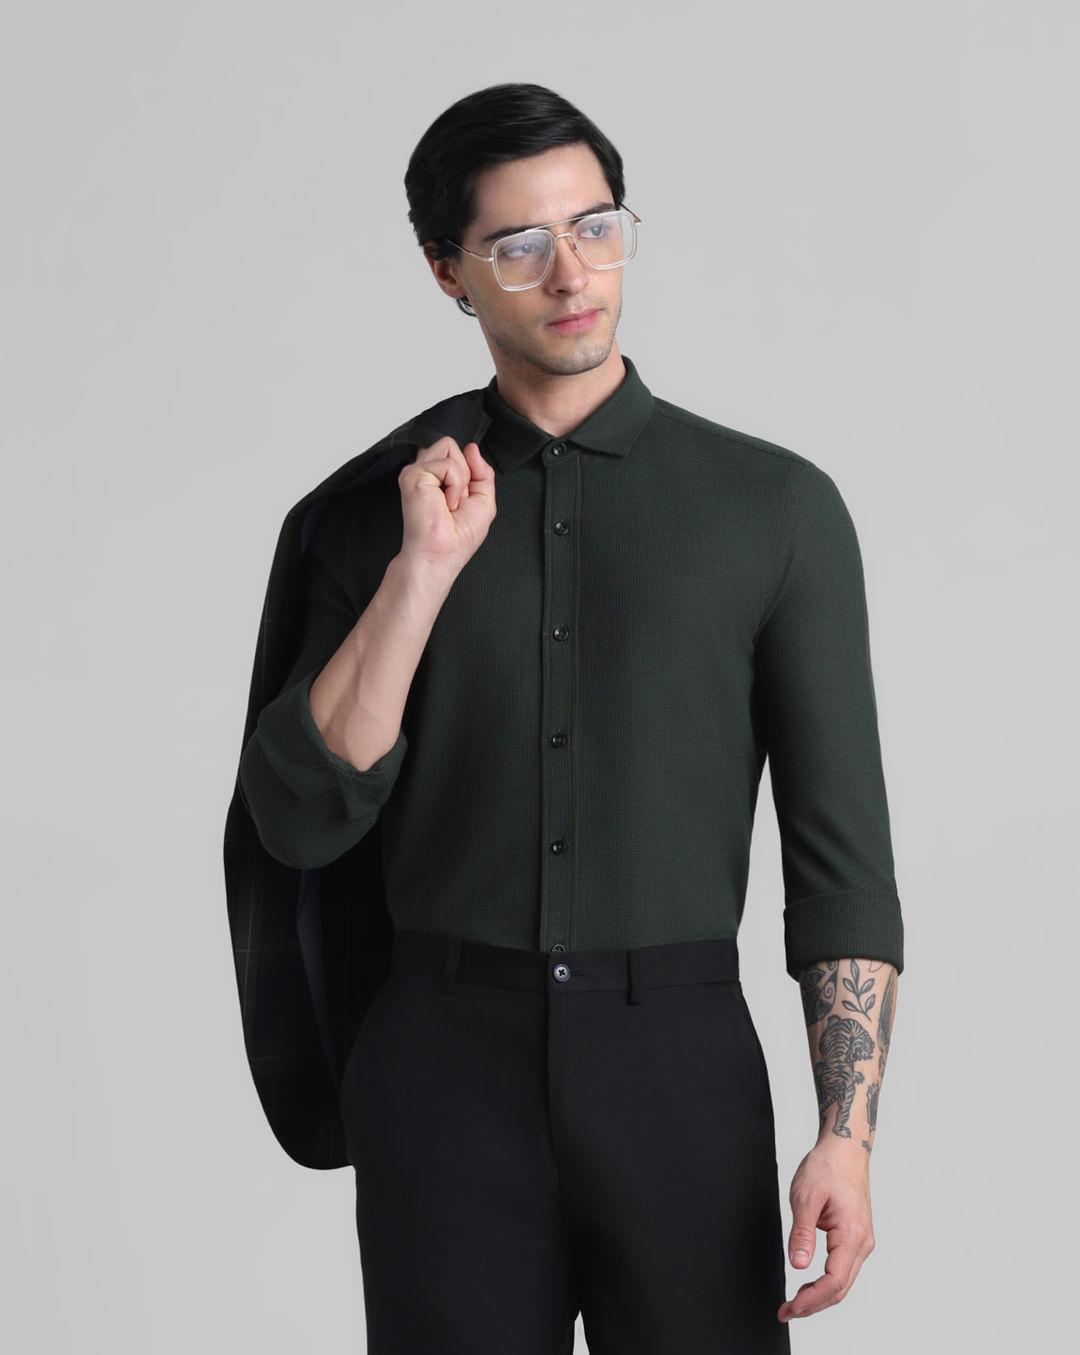 green knitted full sleeves shirt